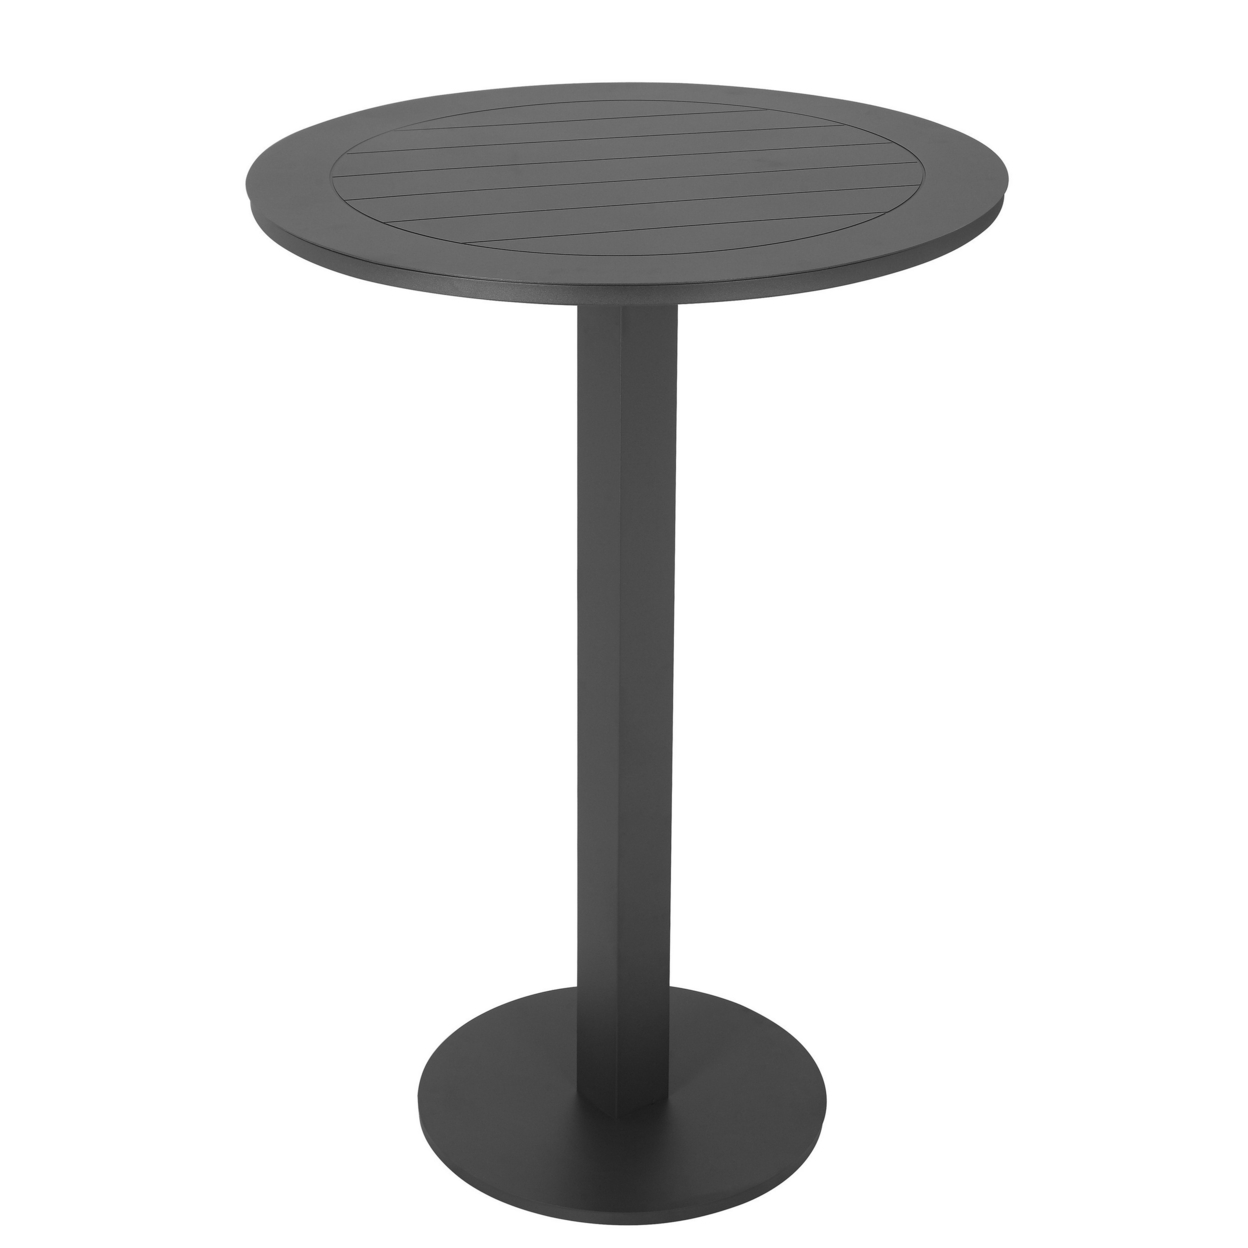 Keli 43 Inch Outdoor Bar Table, Smooth Gray Aluminum, Foldable Design- Saltoro Sherpi